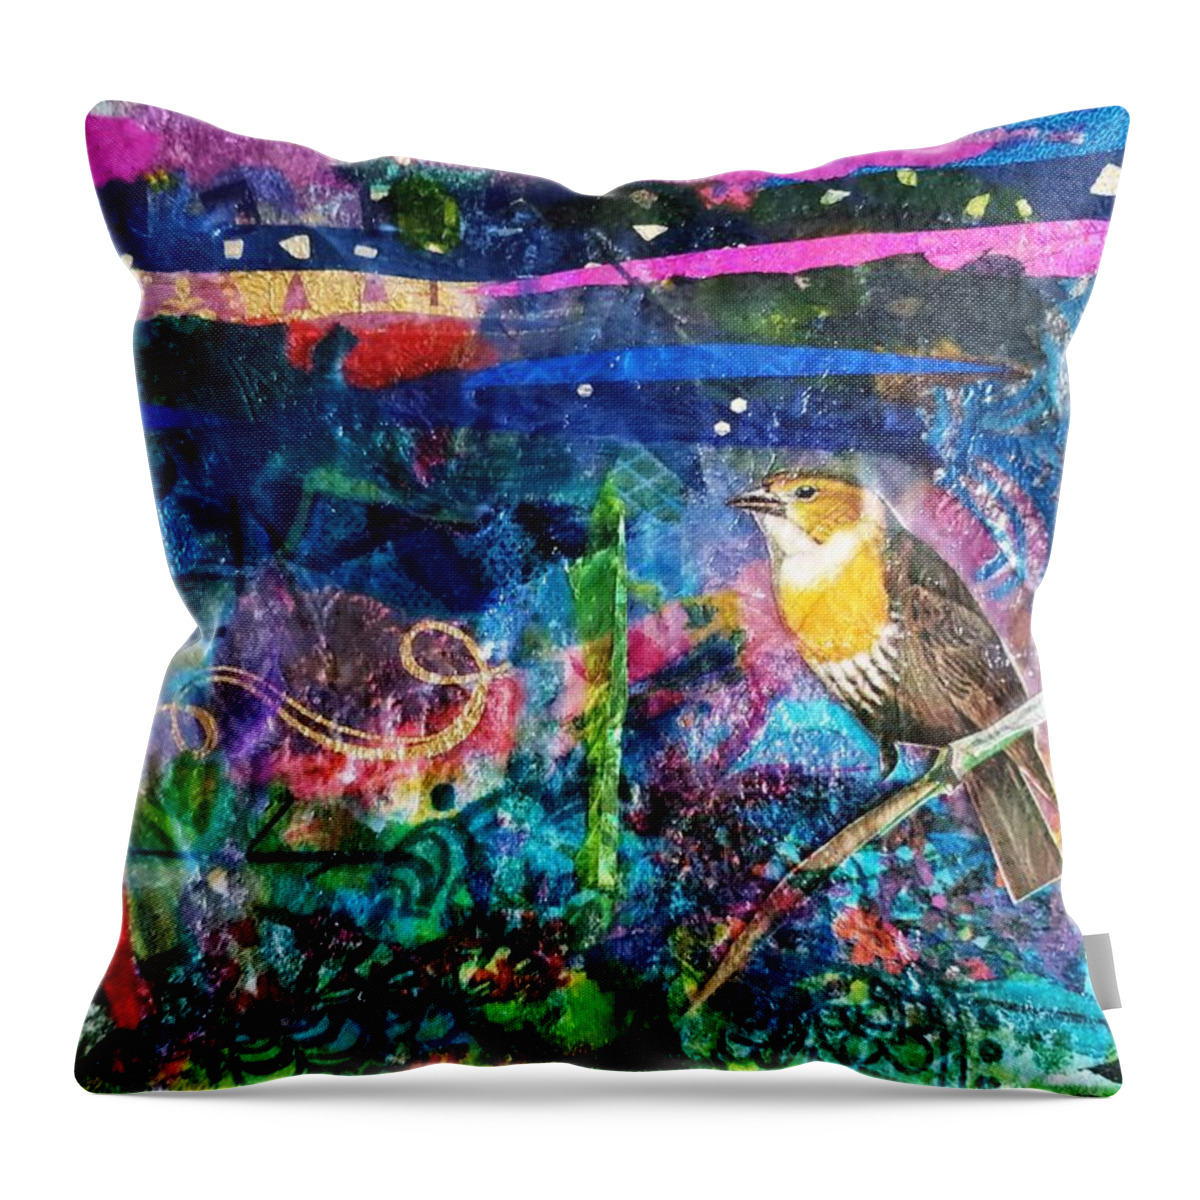  Throw Pillow featuring the mixed media Bird at Night by Deborah Cherrin